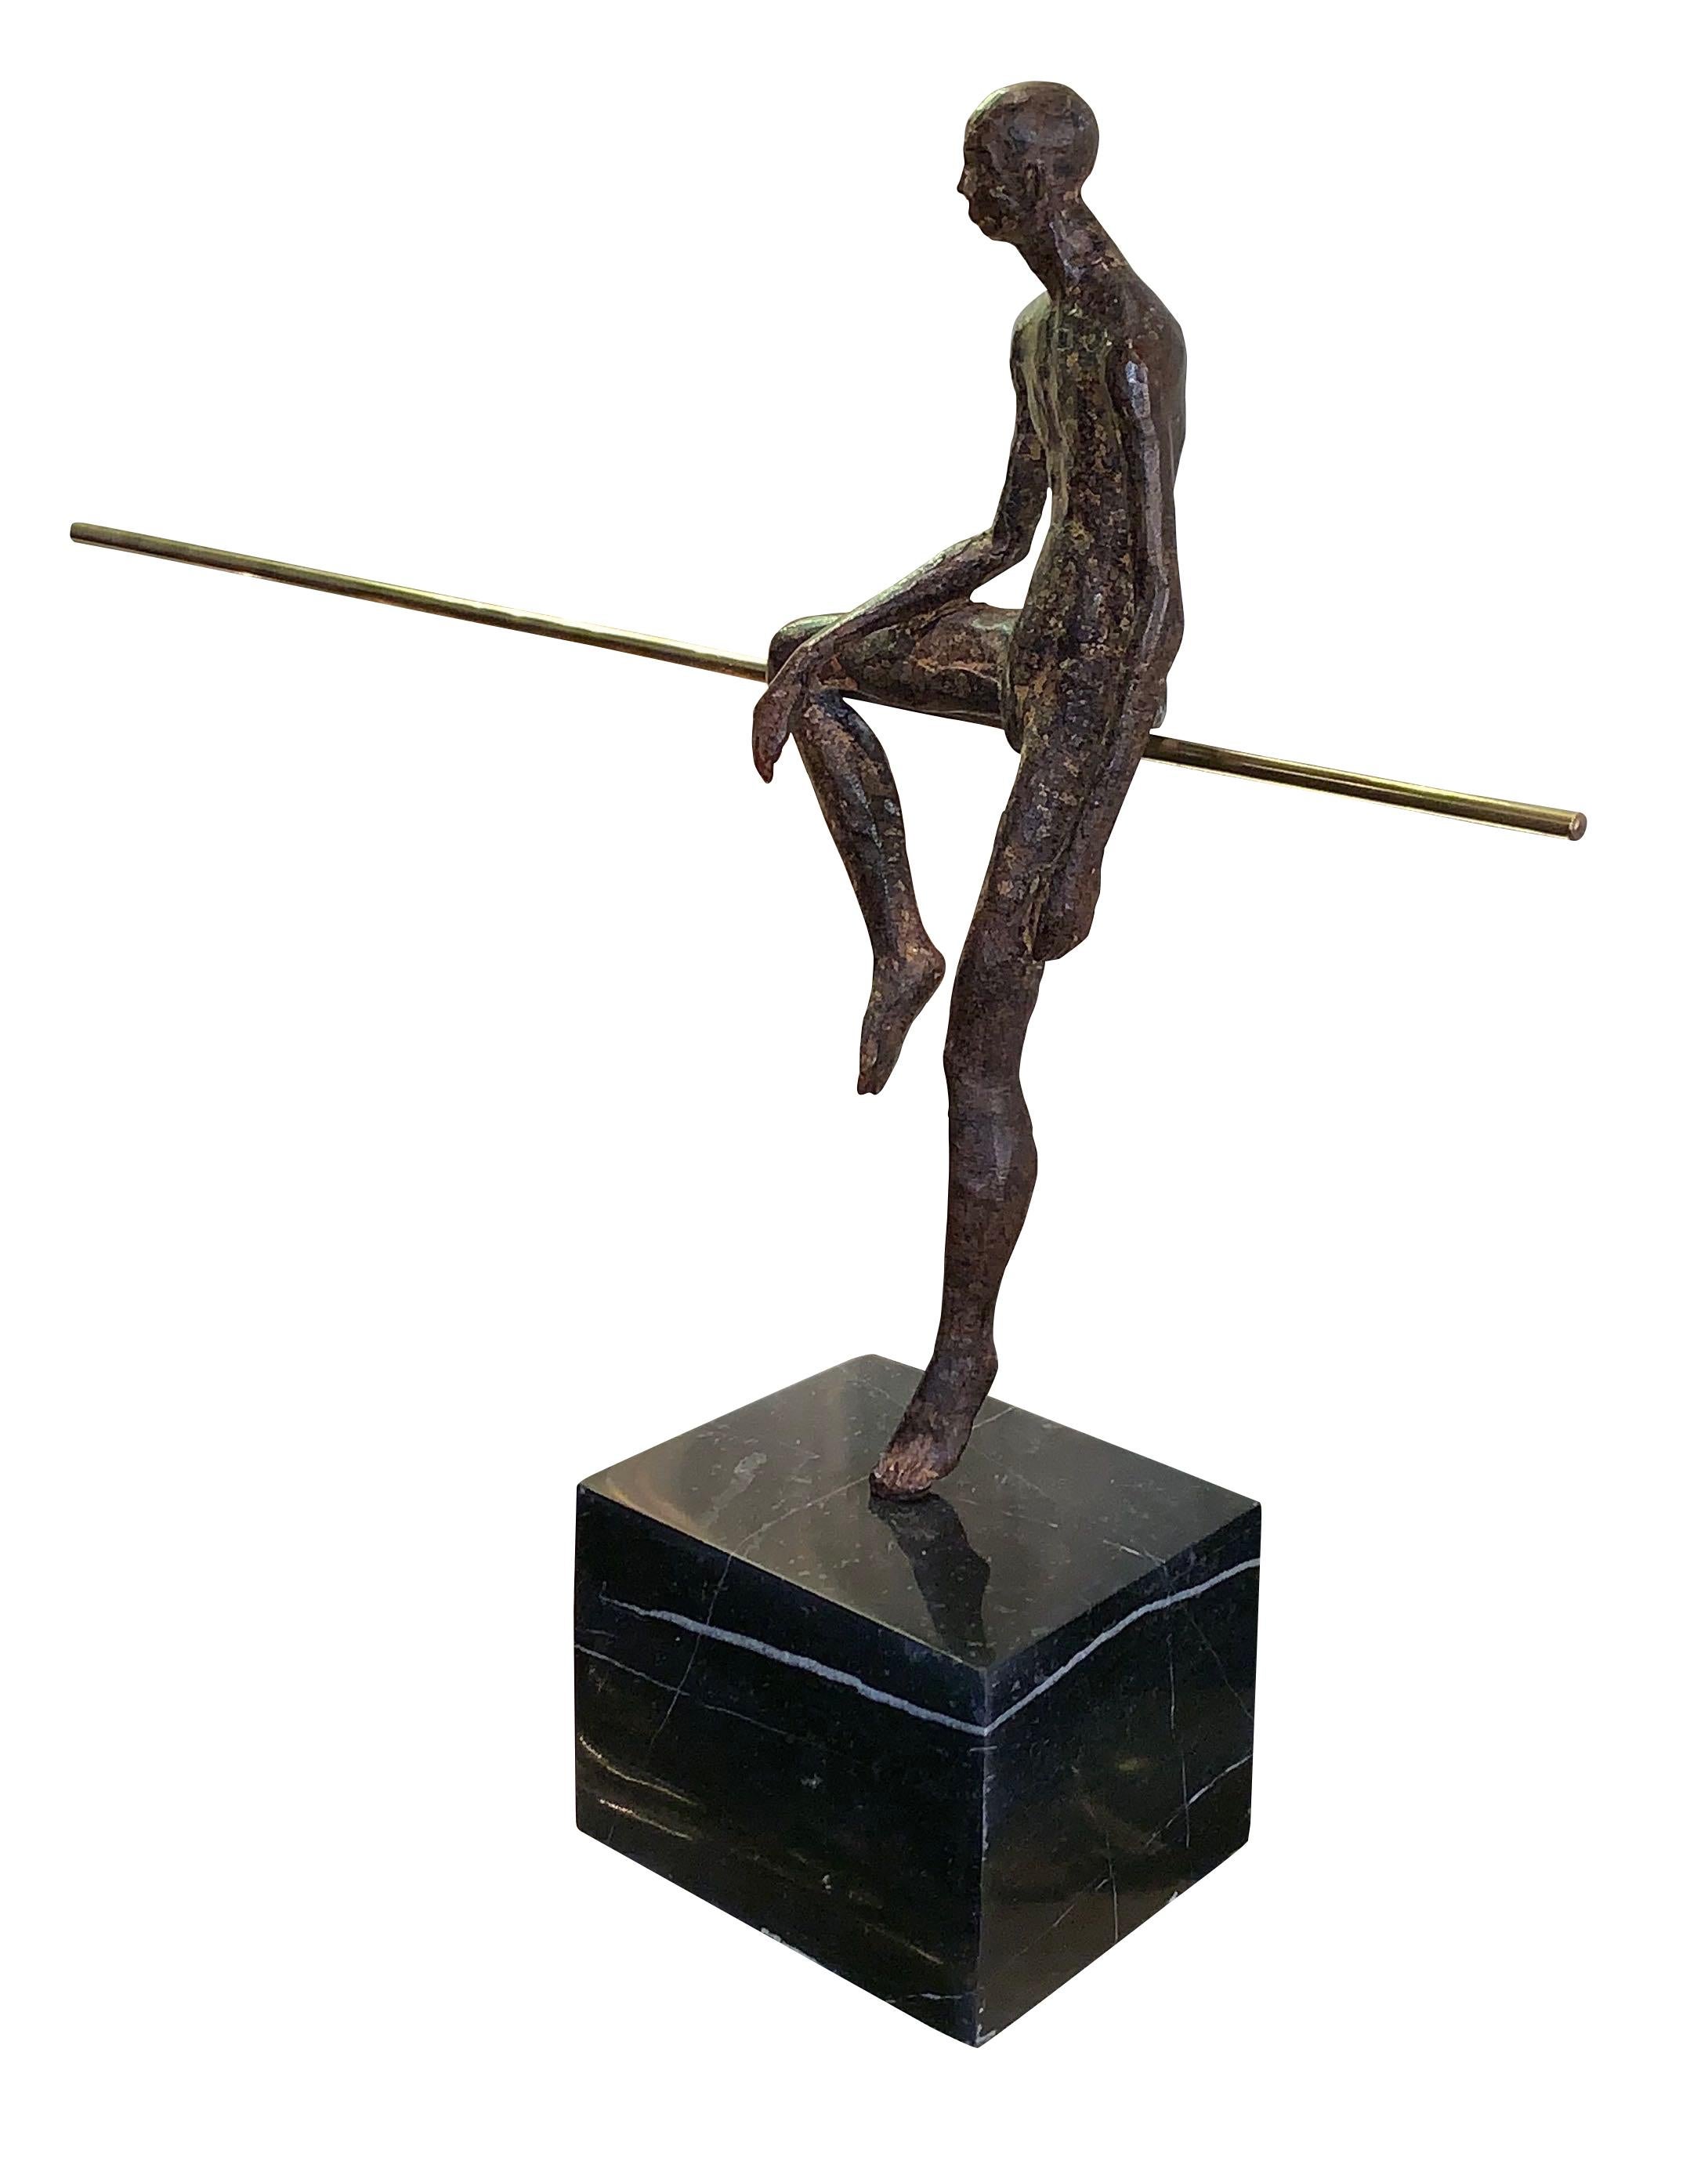 Contemporary German bronze sculpture of half seated man
Beautiful patina
Brass rod
Marble base measures: 5 